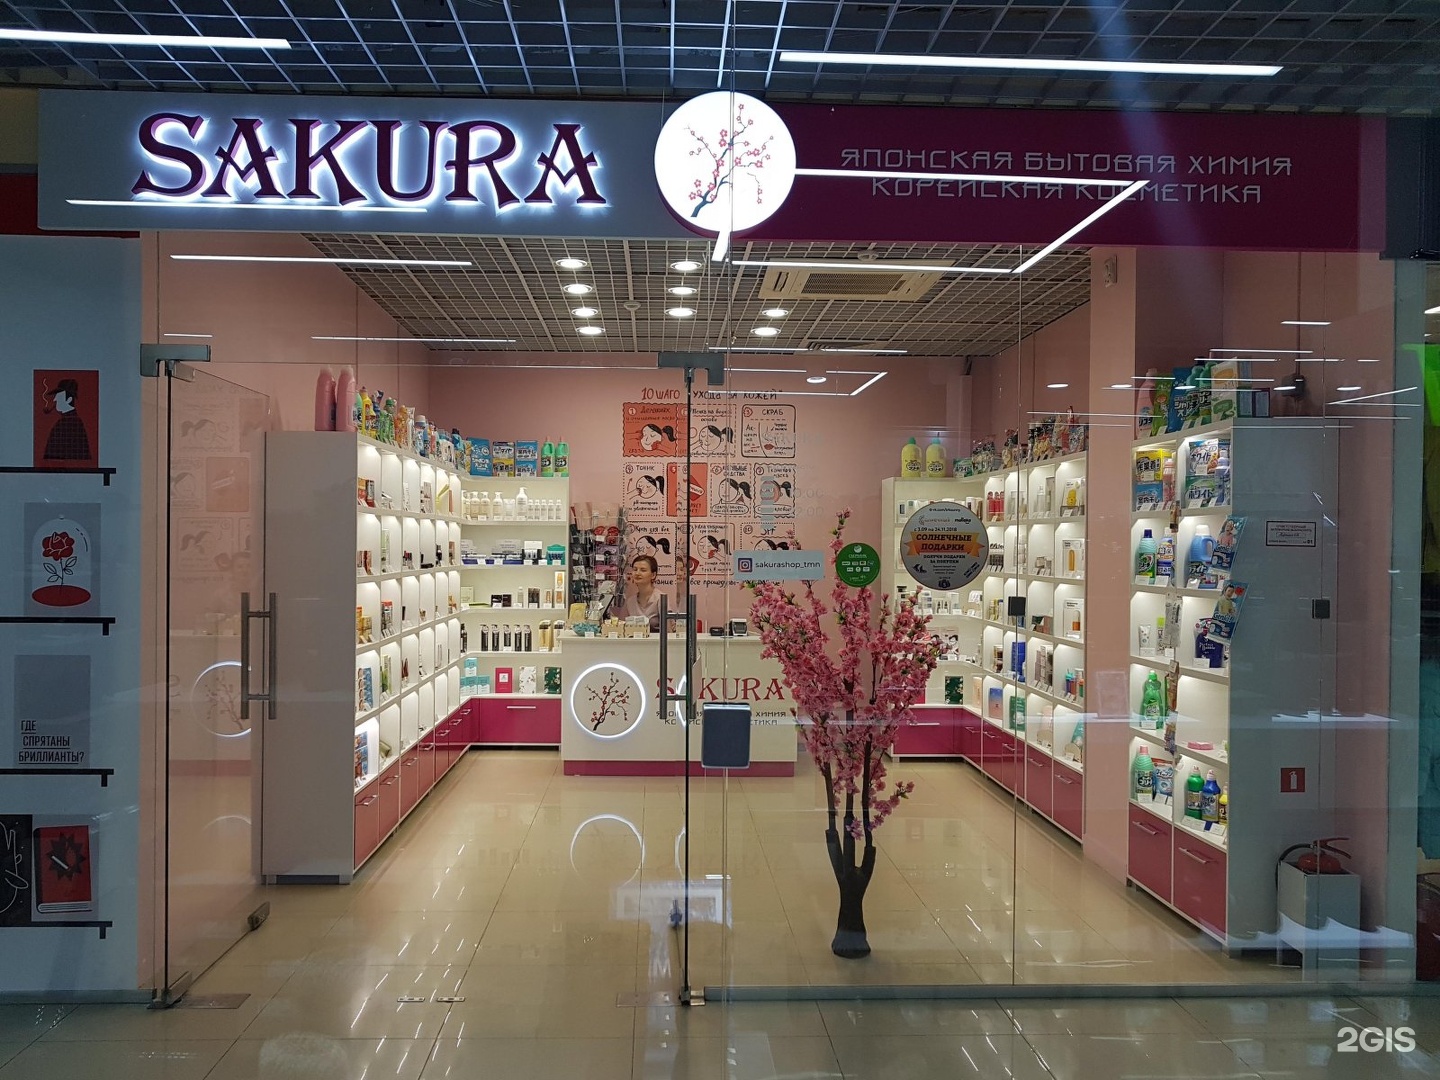 Сакура товары. Название магазина косметики. Название для магазина корейской косметики. Магазины косметики в Корее названия. Магазин Сакура.